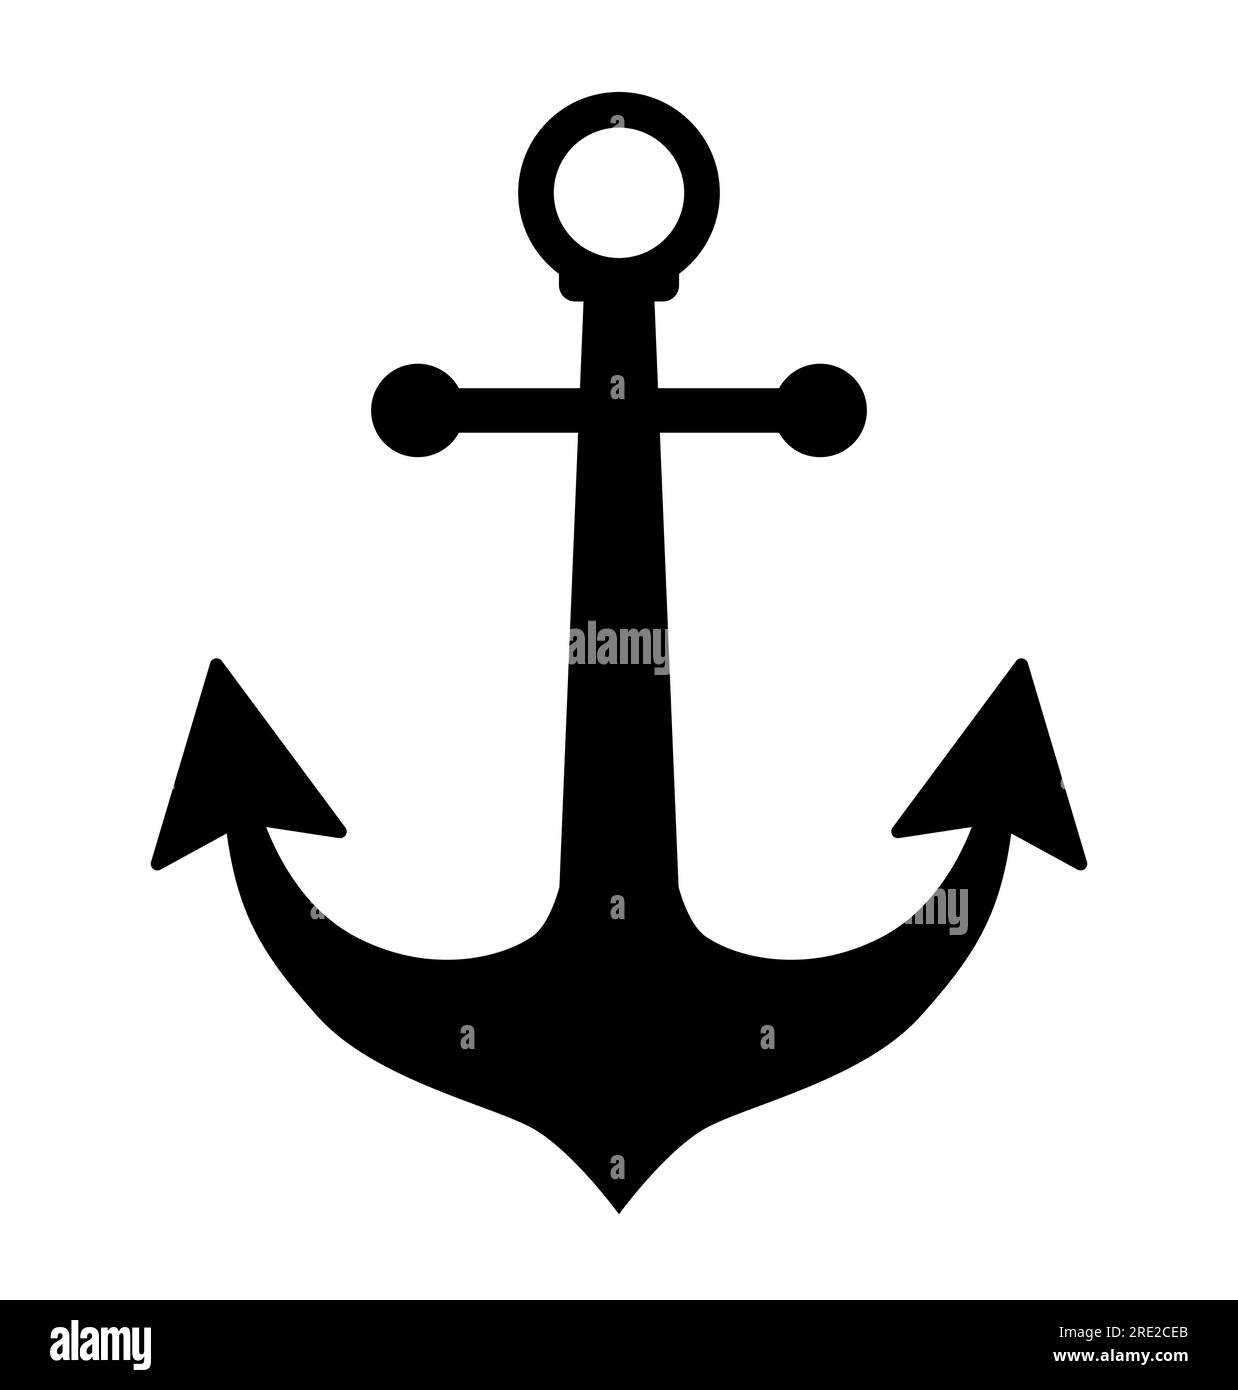 Simple ship anchor symbol boat anchor vector illustration icon Stock Vector